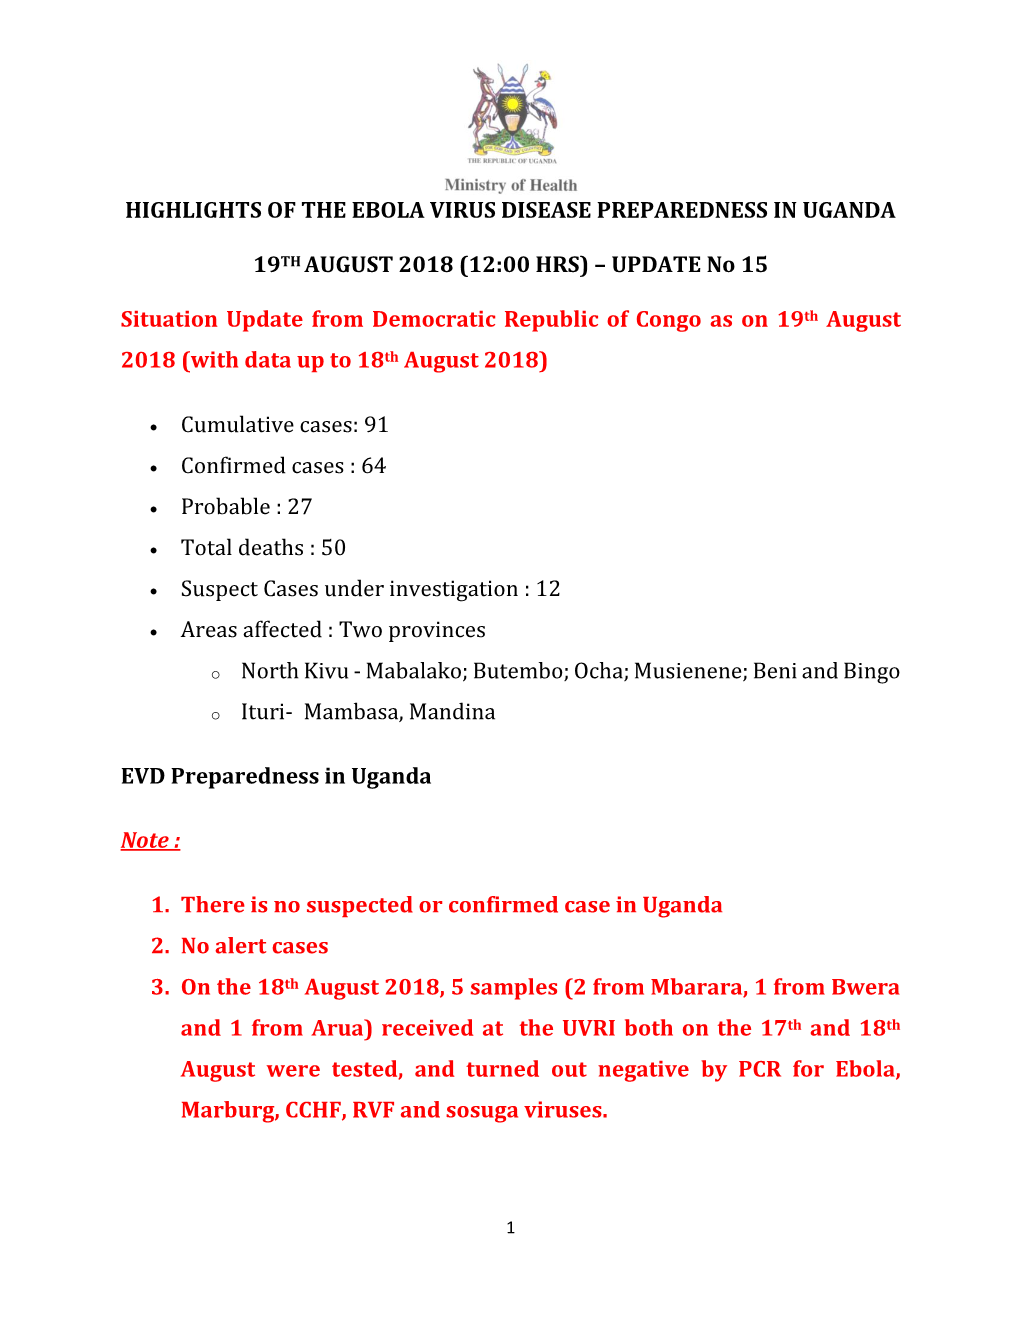 Highlights of the Ebola Virus Disease Preparedness in Uganda